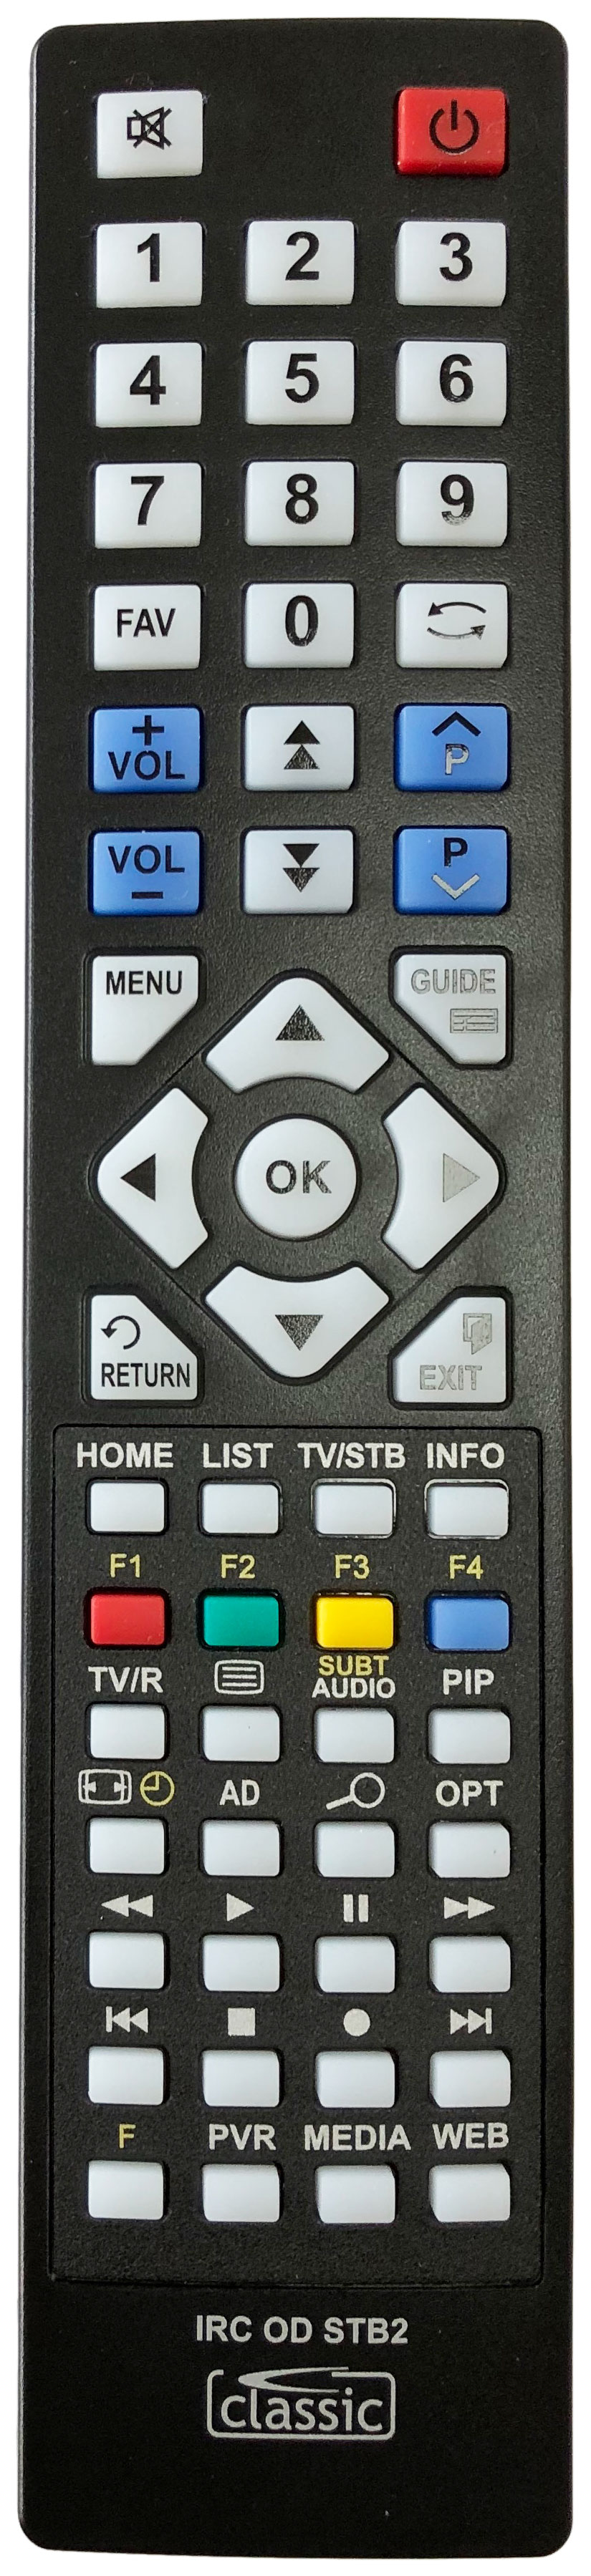 HUMAX FVP-4000T 500GB - Mocha Remote Control Alternative